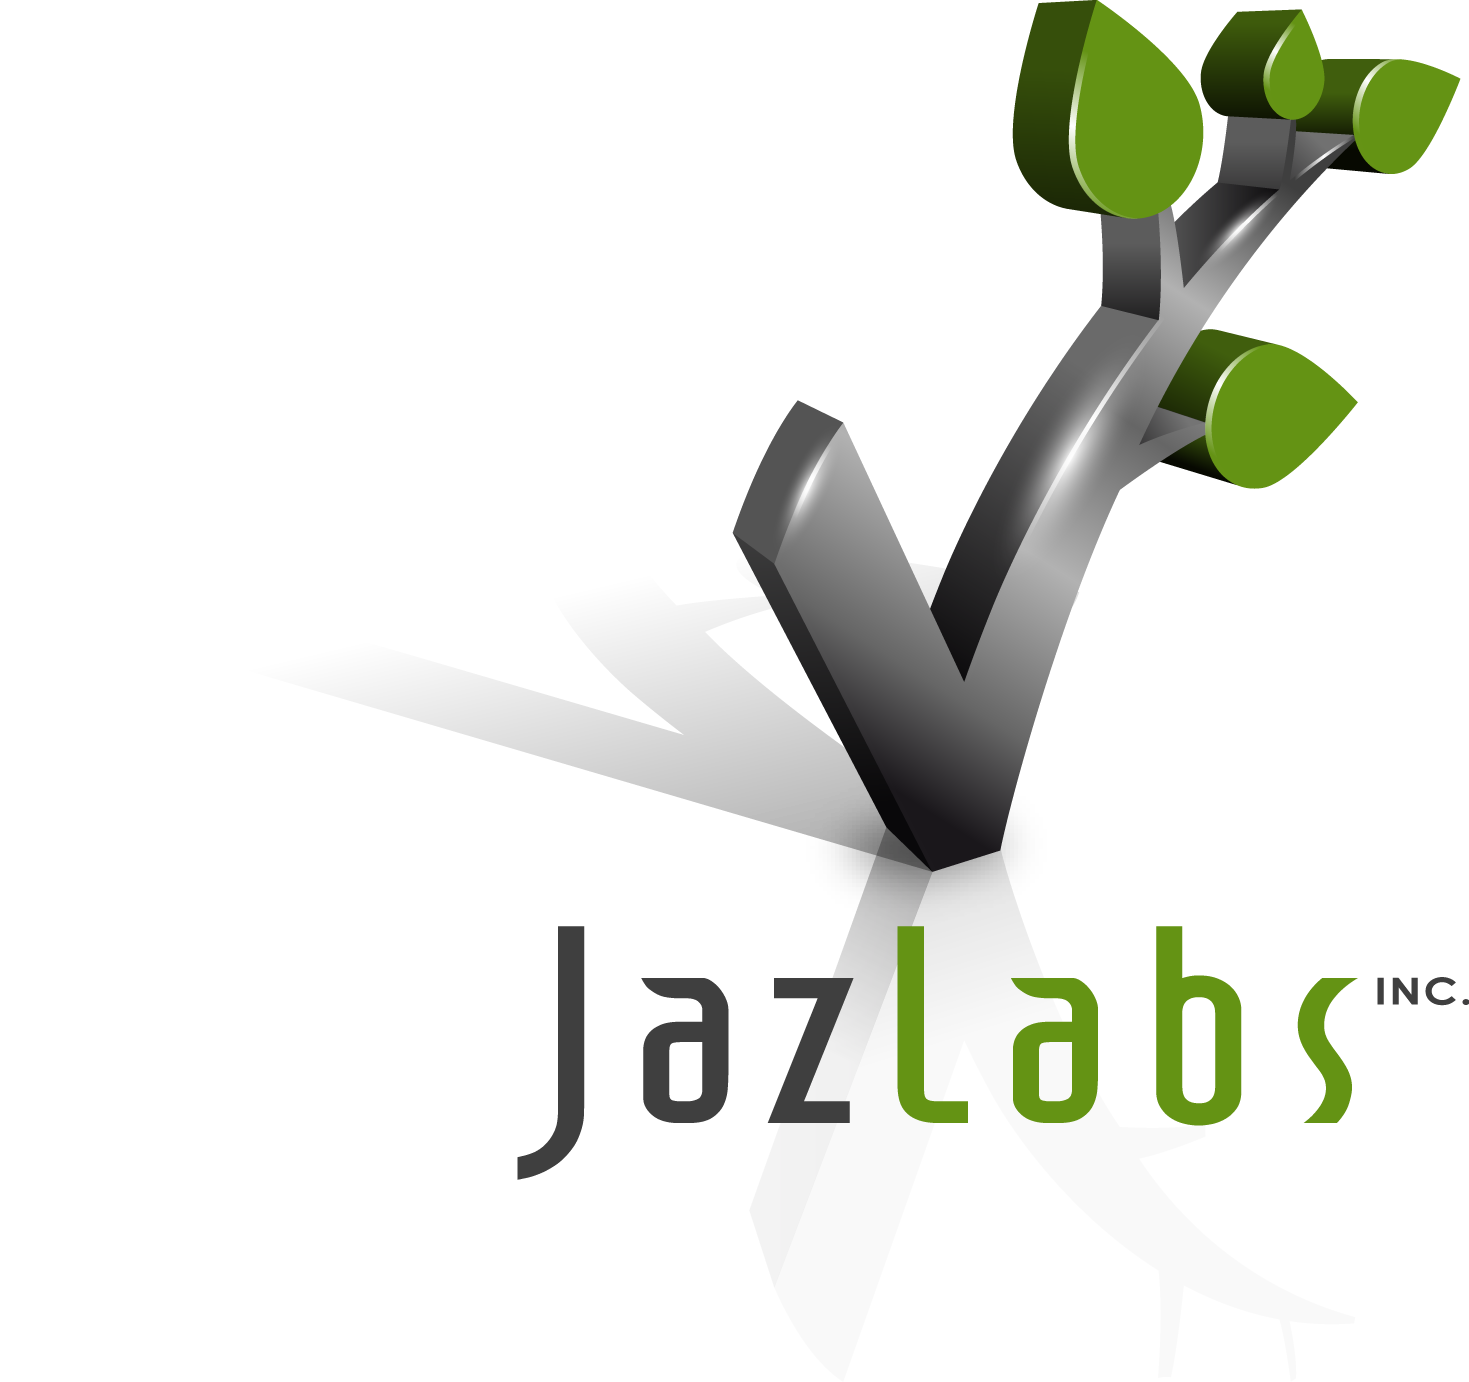 JazLabs, Inc